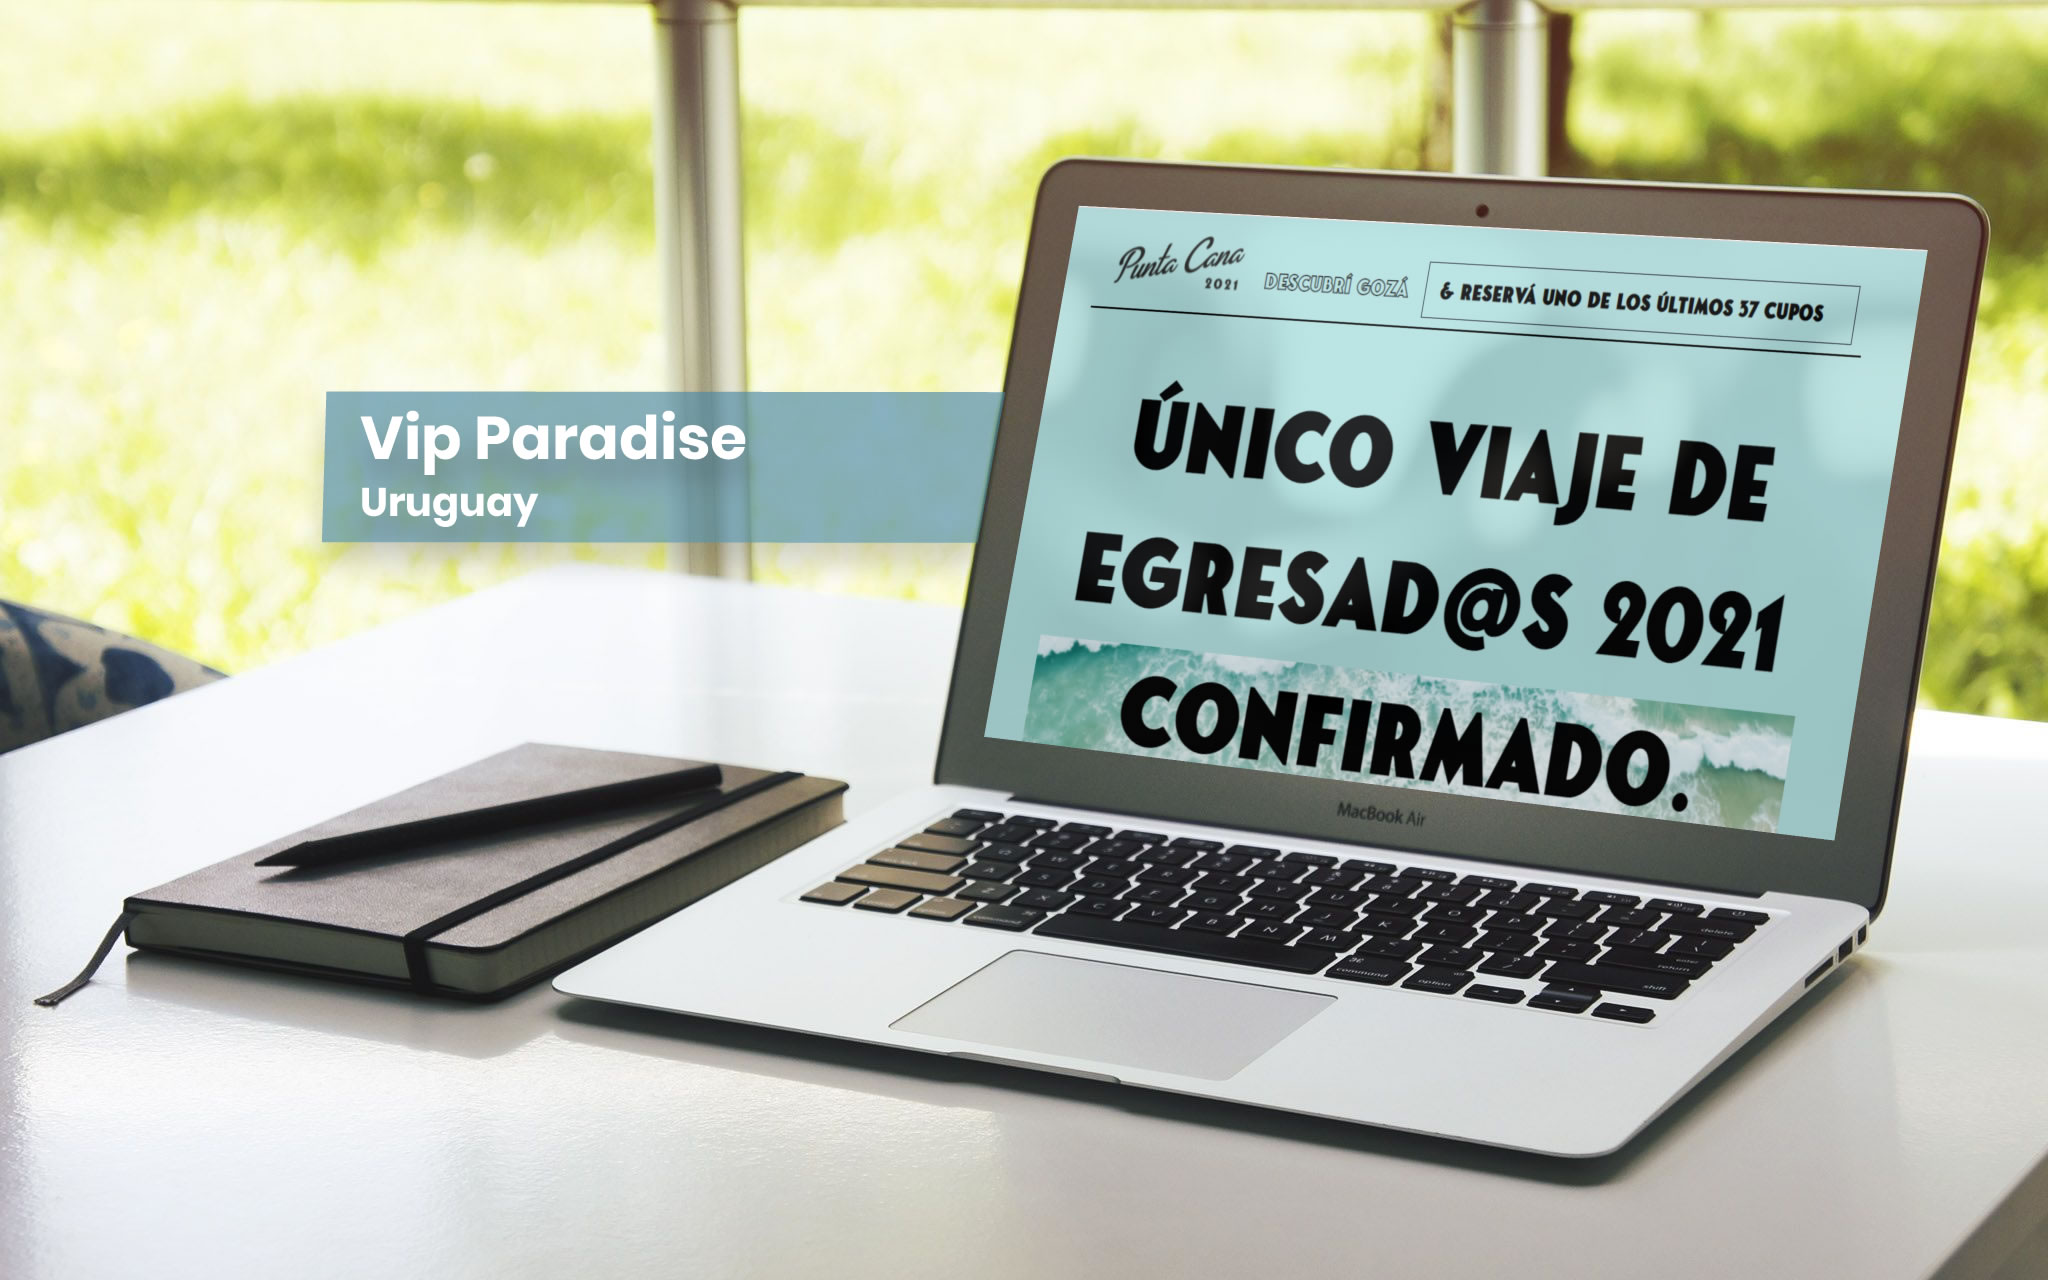 Vip Paradise - Uruguay